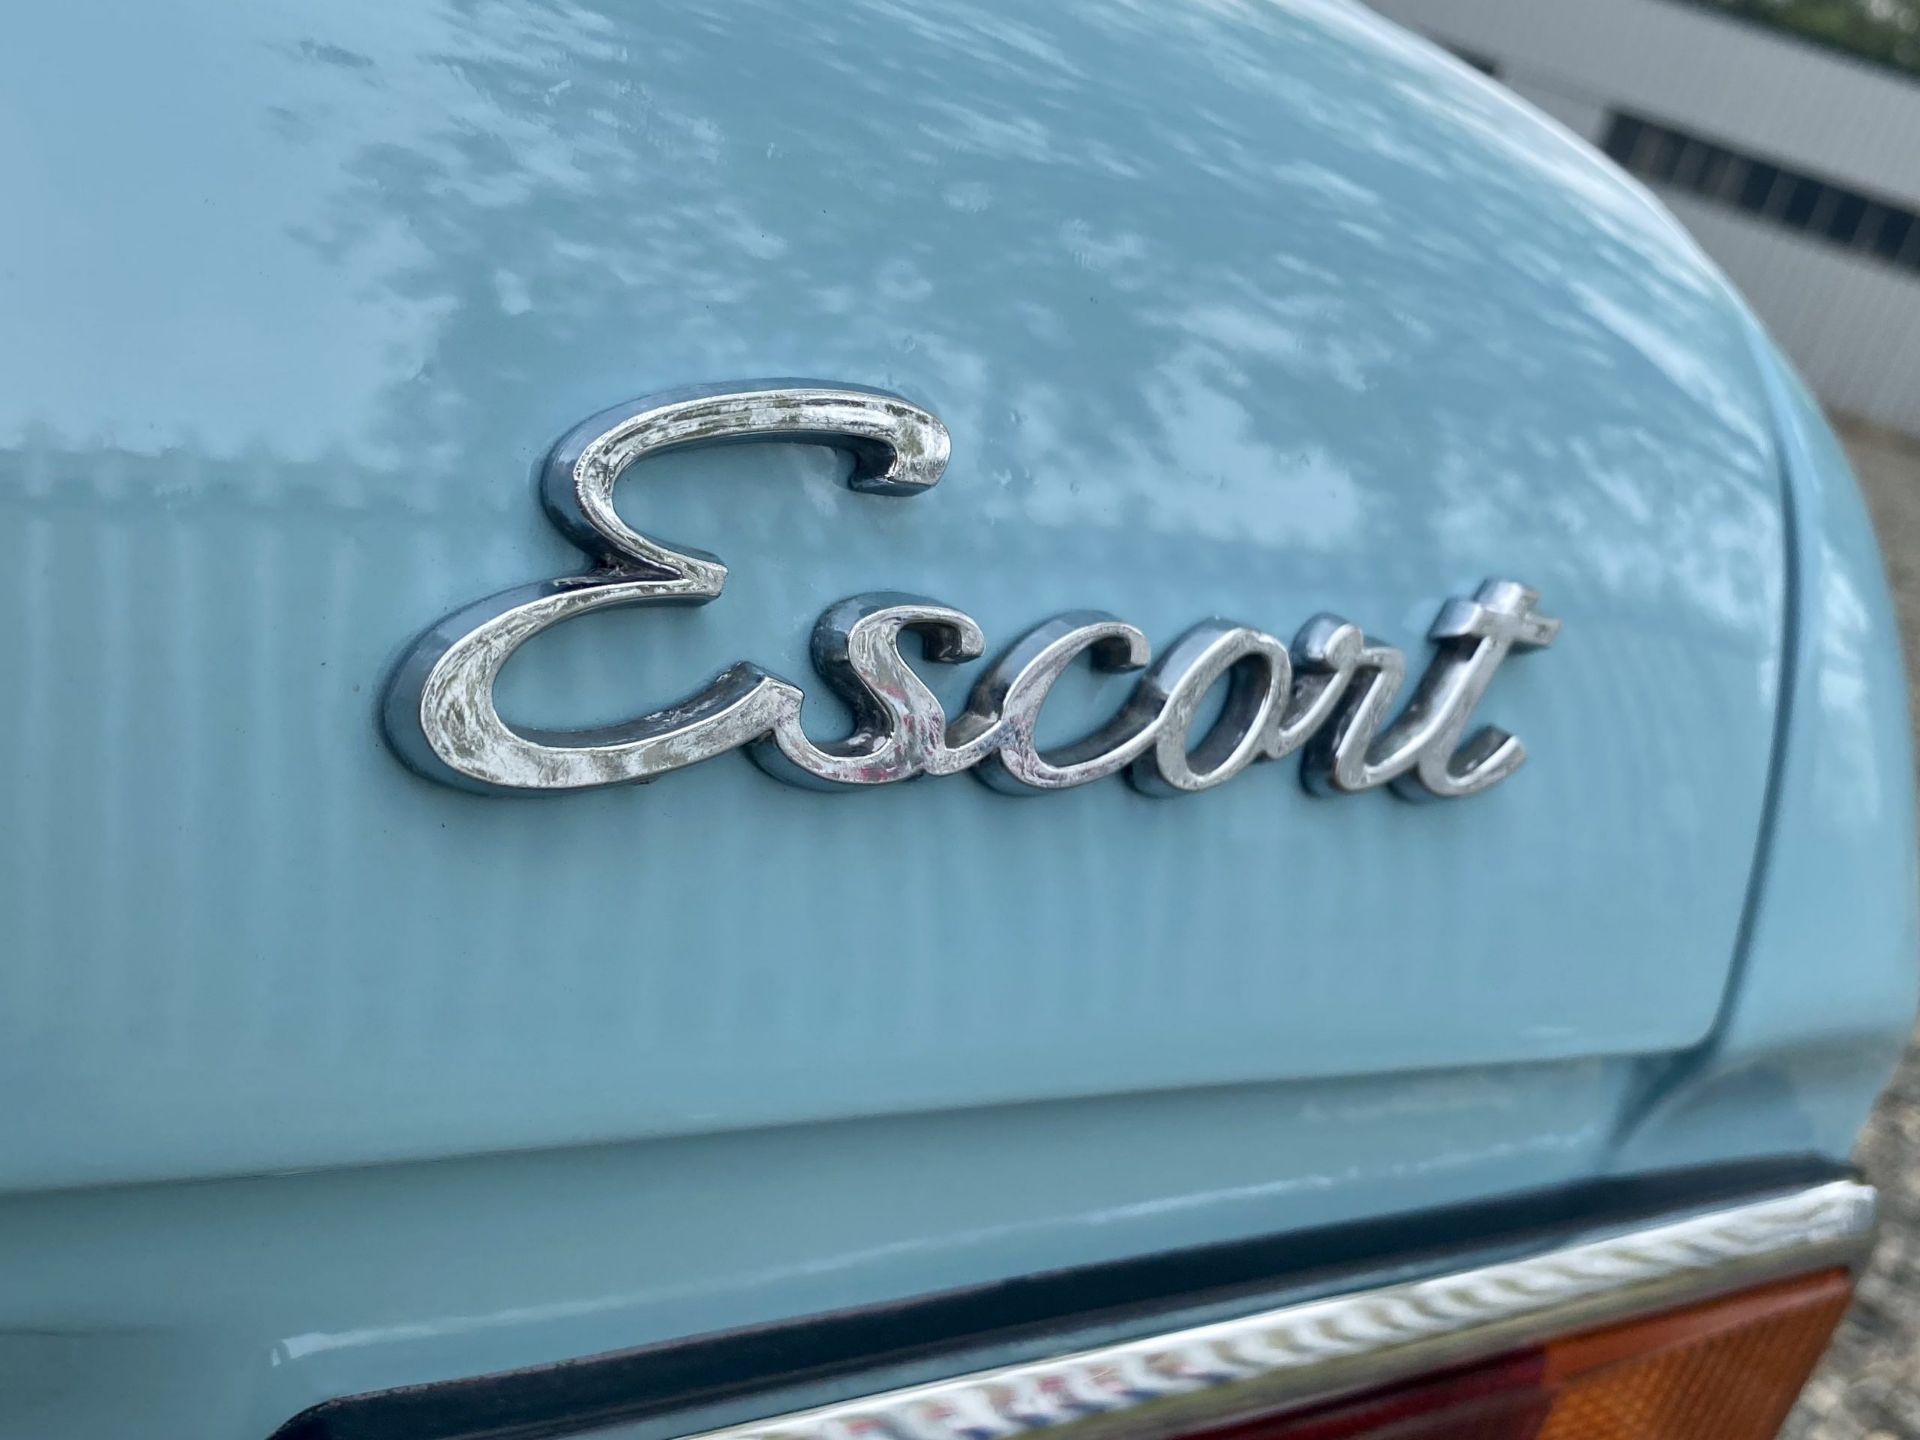 Ford Escort mk1 - Image 24 of 38